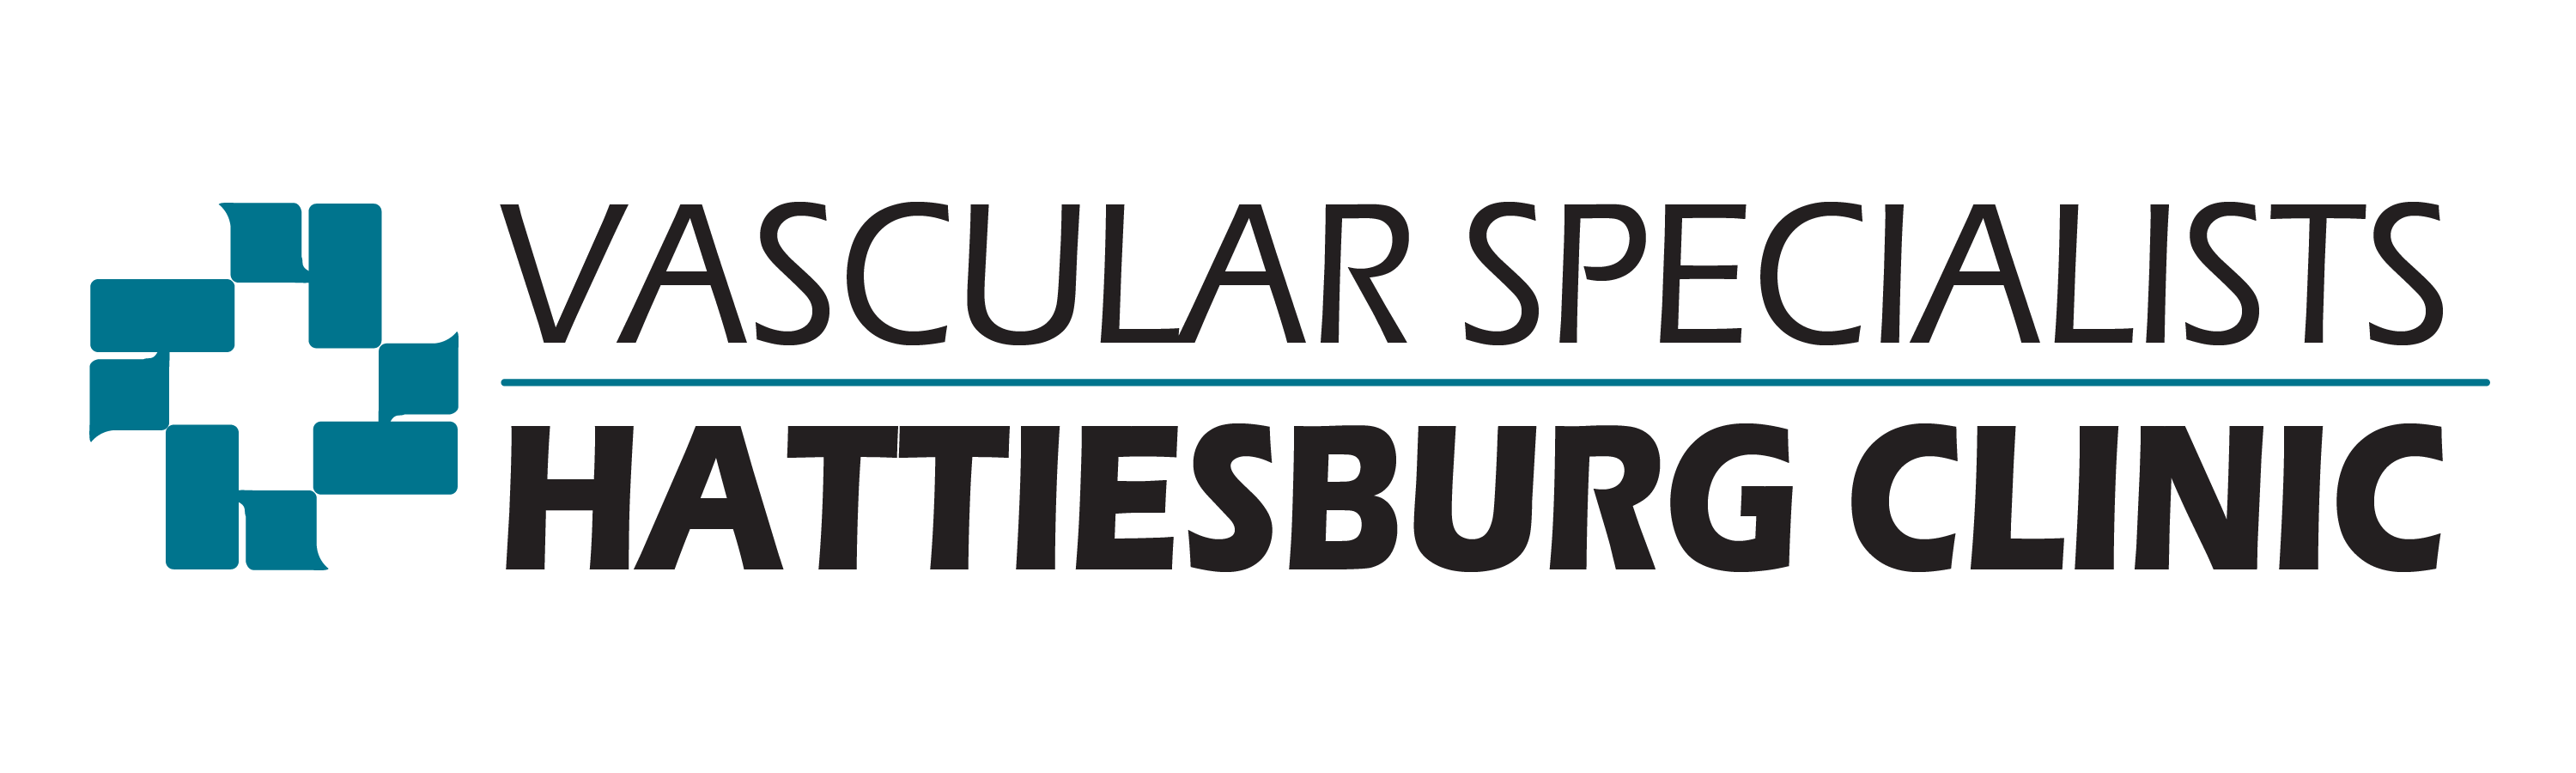 Vascular Specialists logo